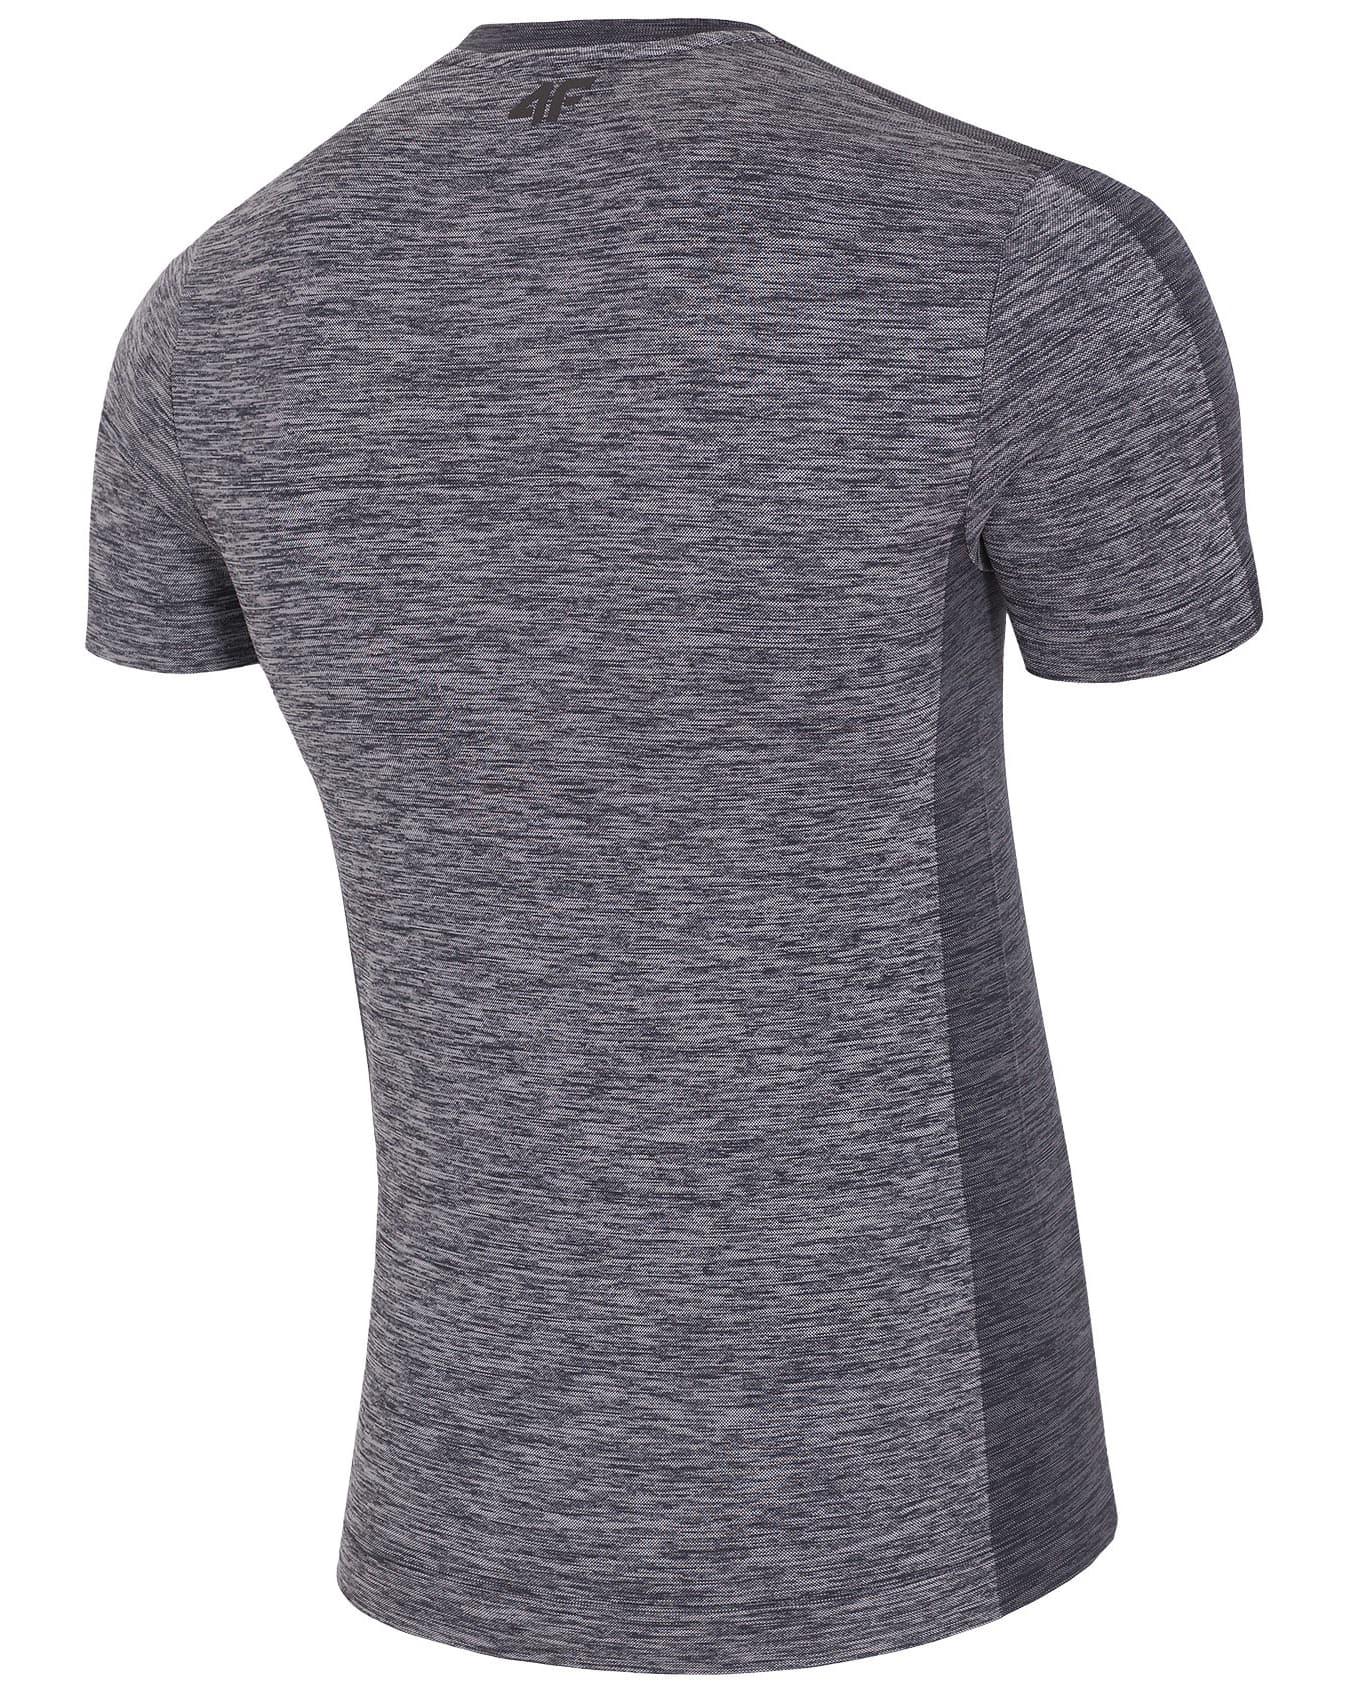 4F Man’s T-Shirt - Light Grey Melange